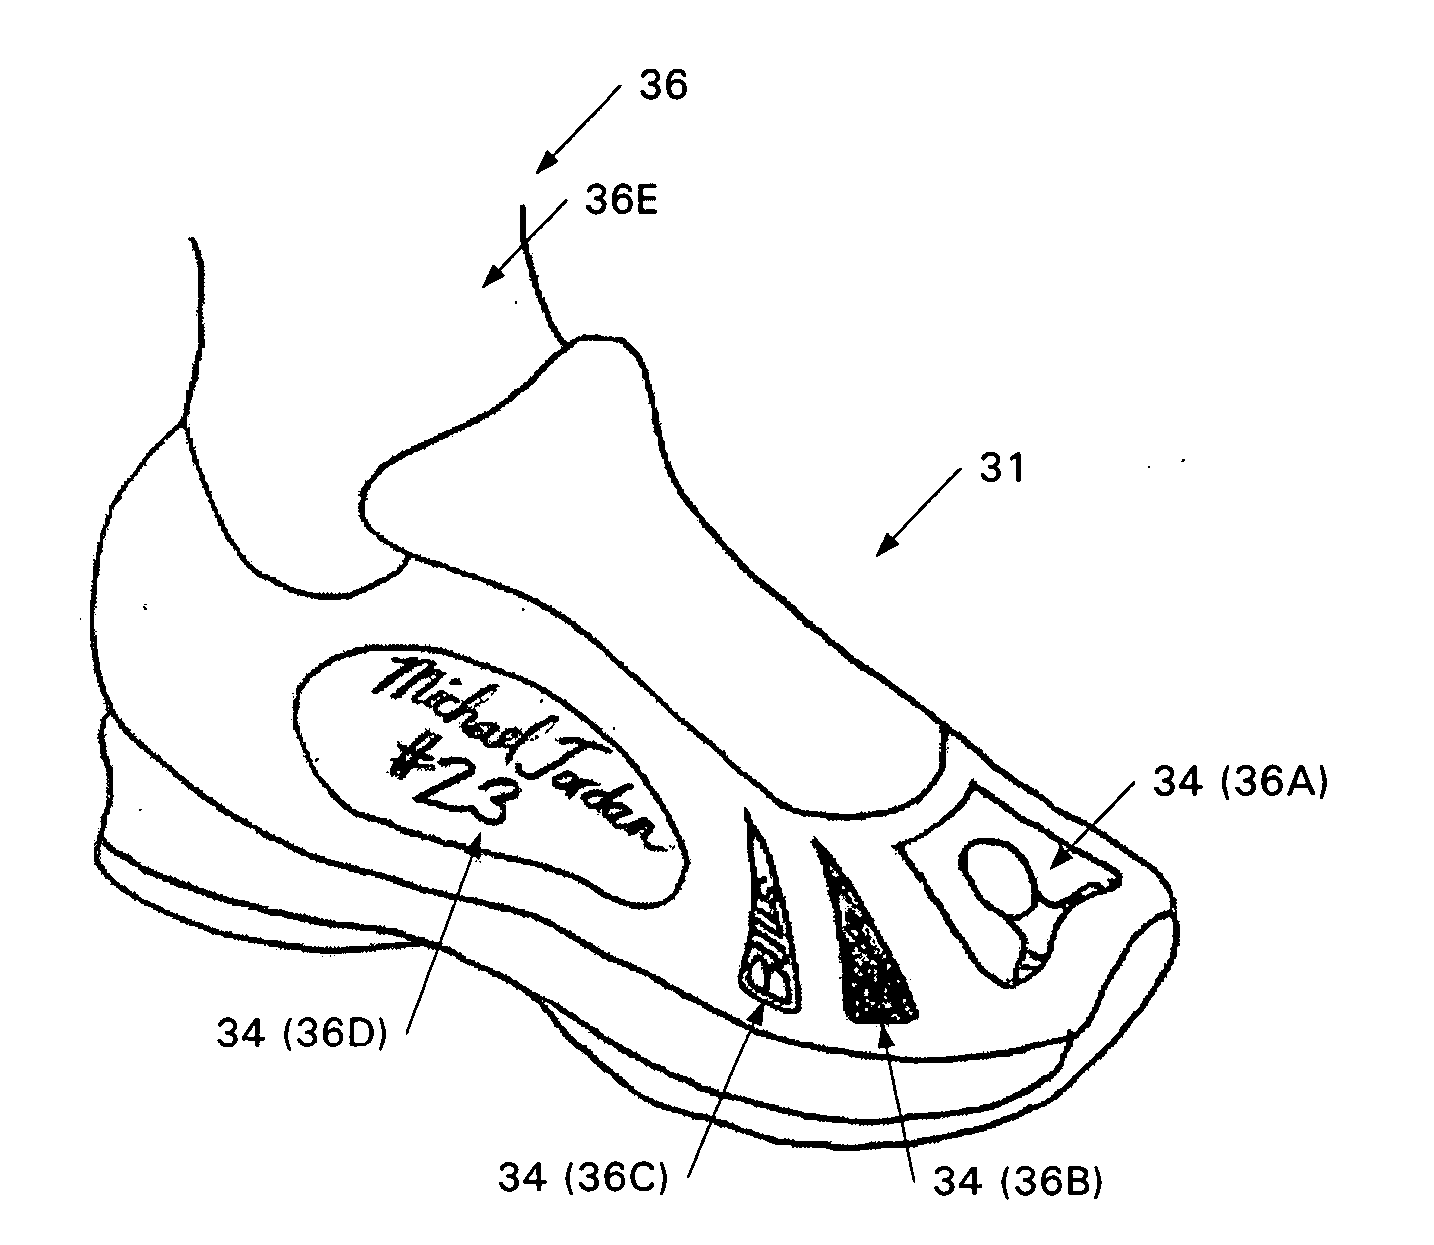 Shoe with transparent panels